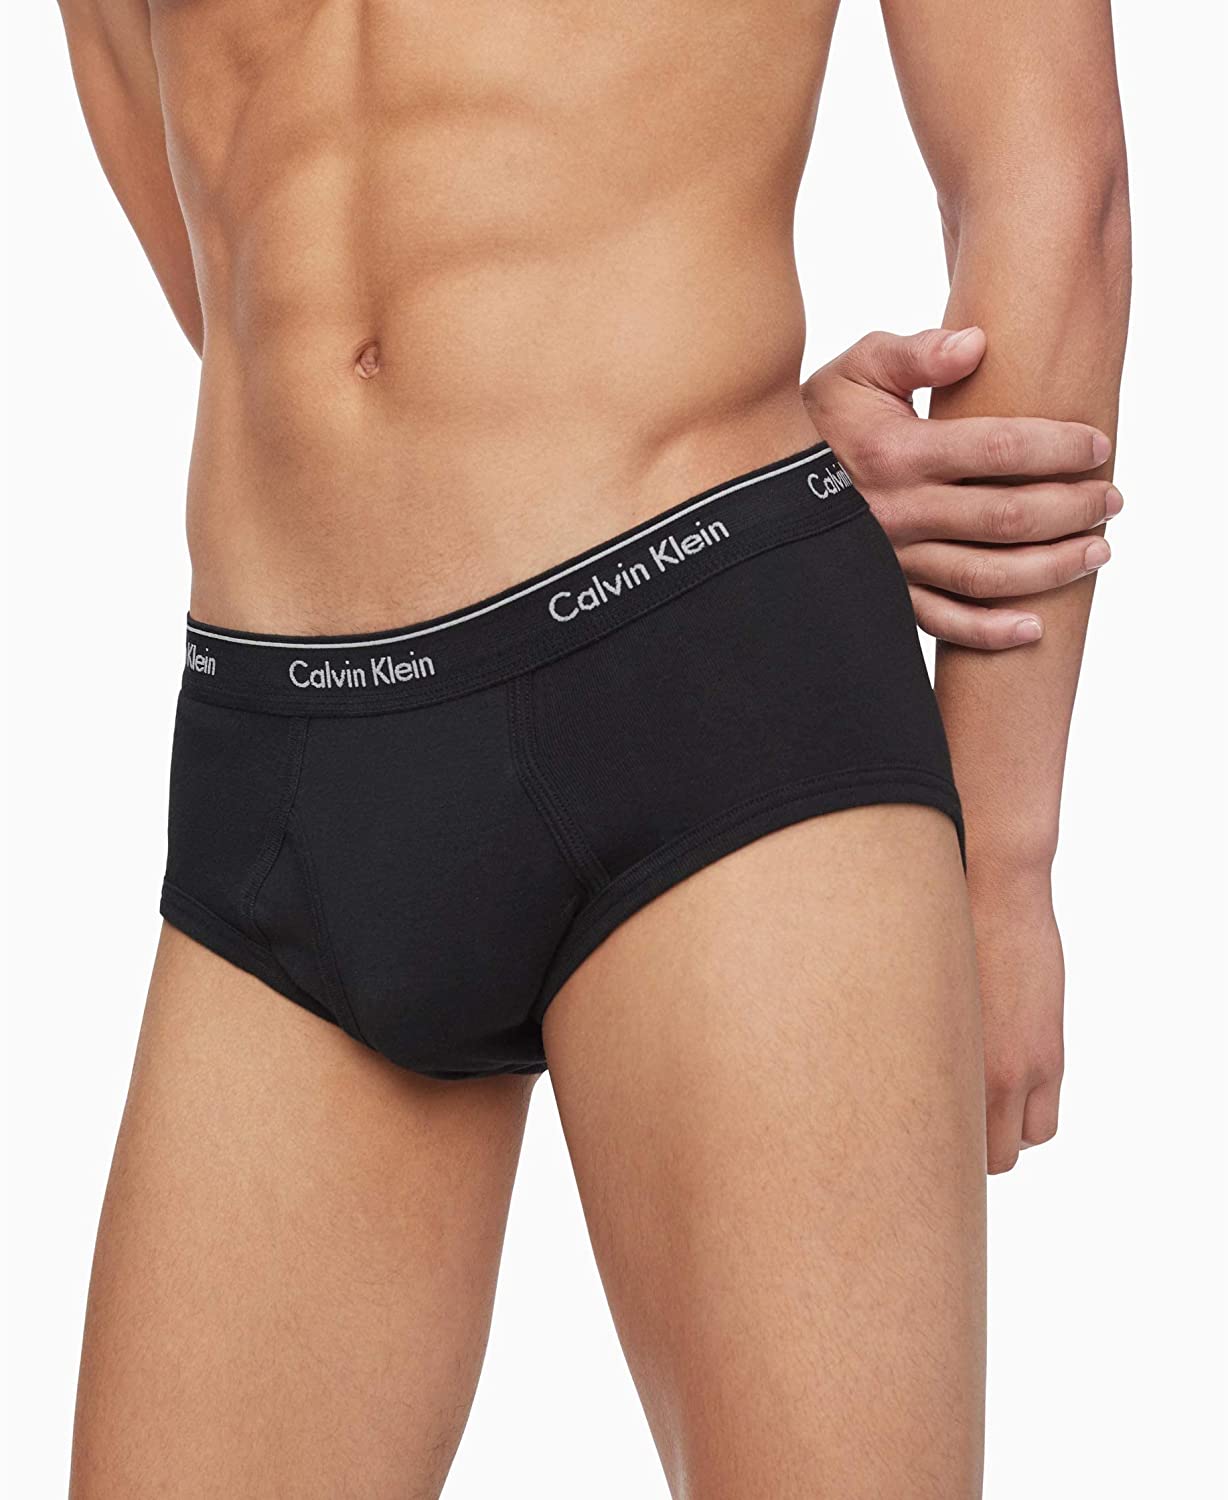 Men's Underwear Cotton Classics 4-Pack Hip Brief